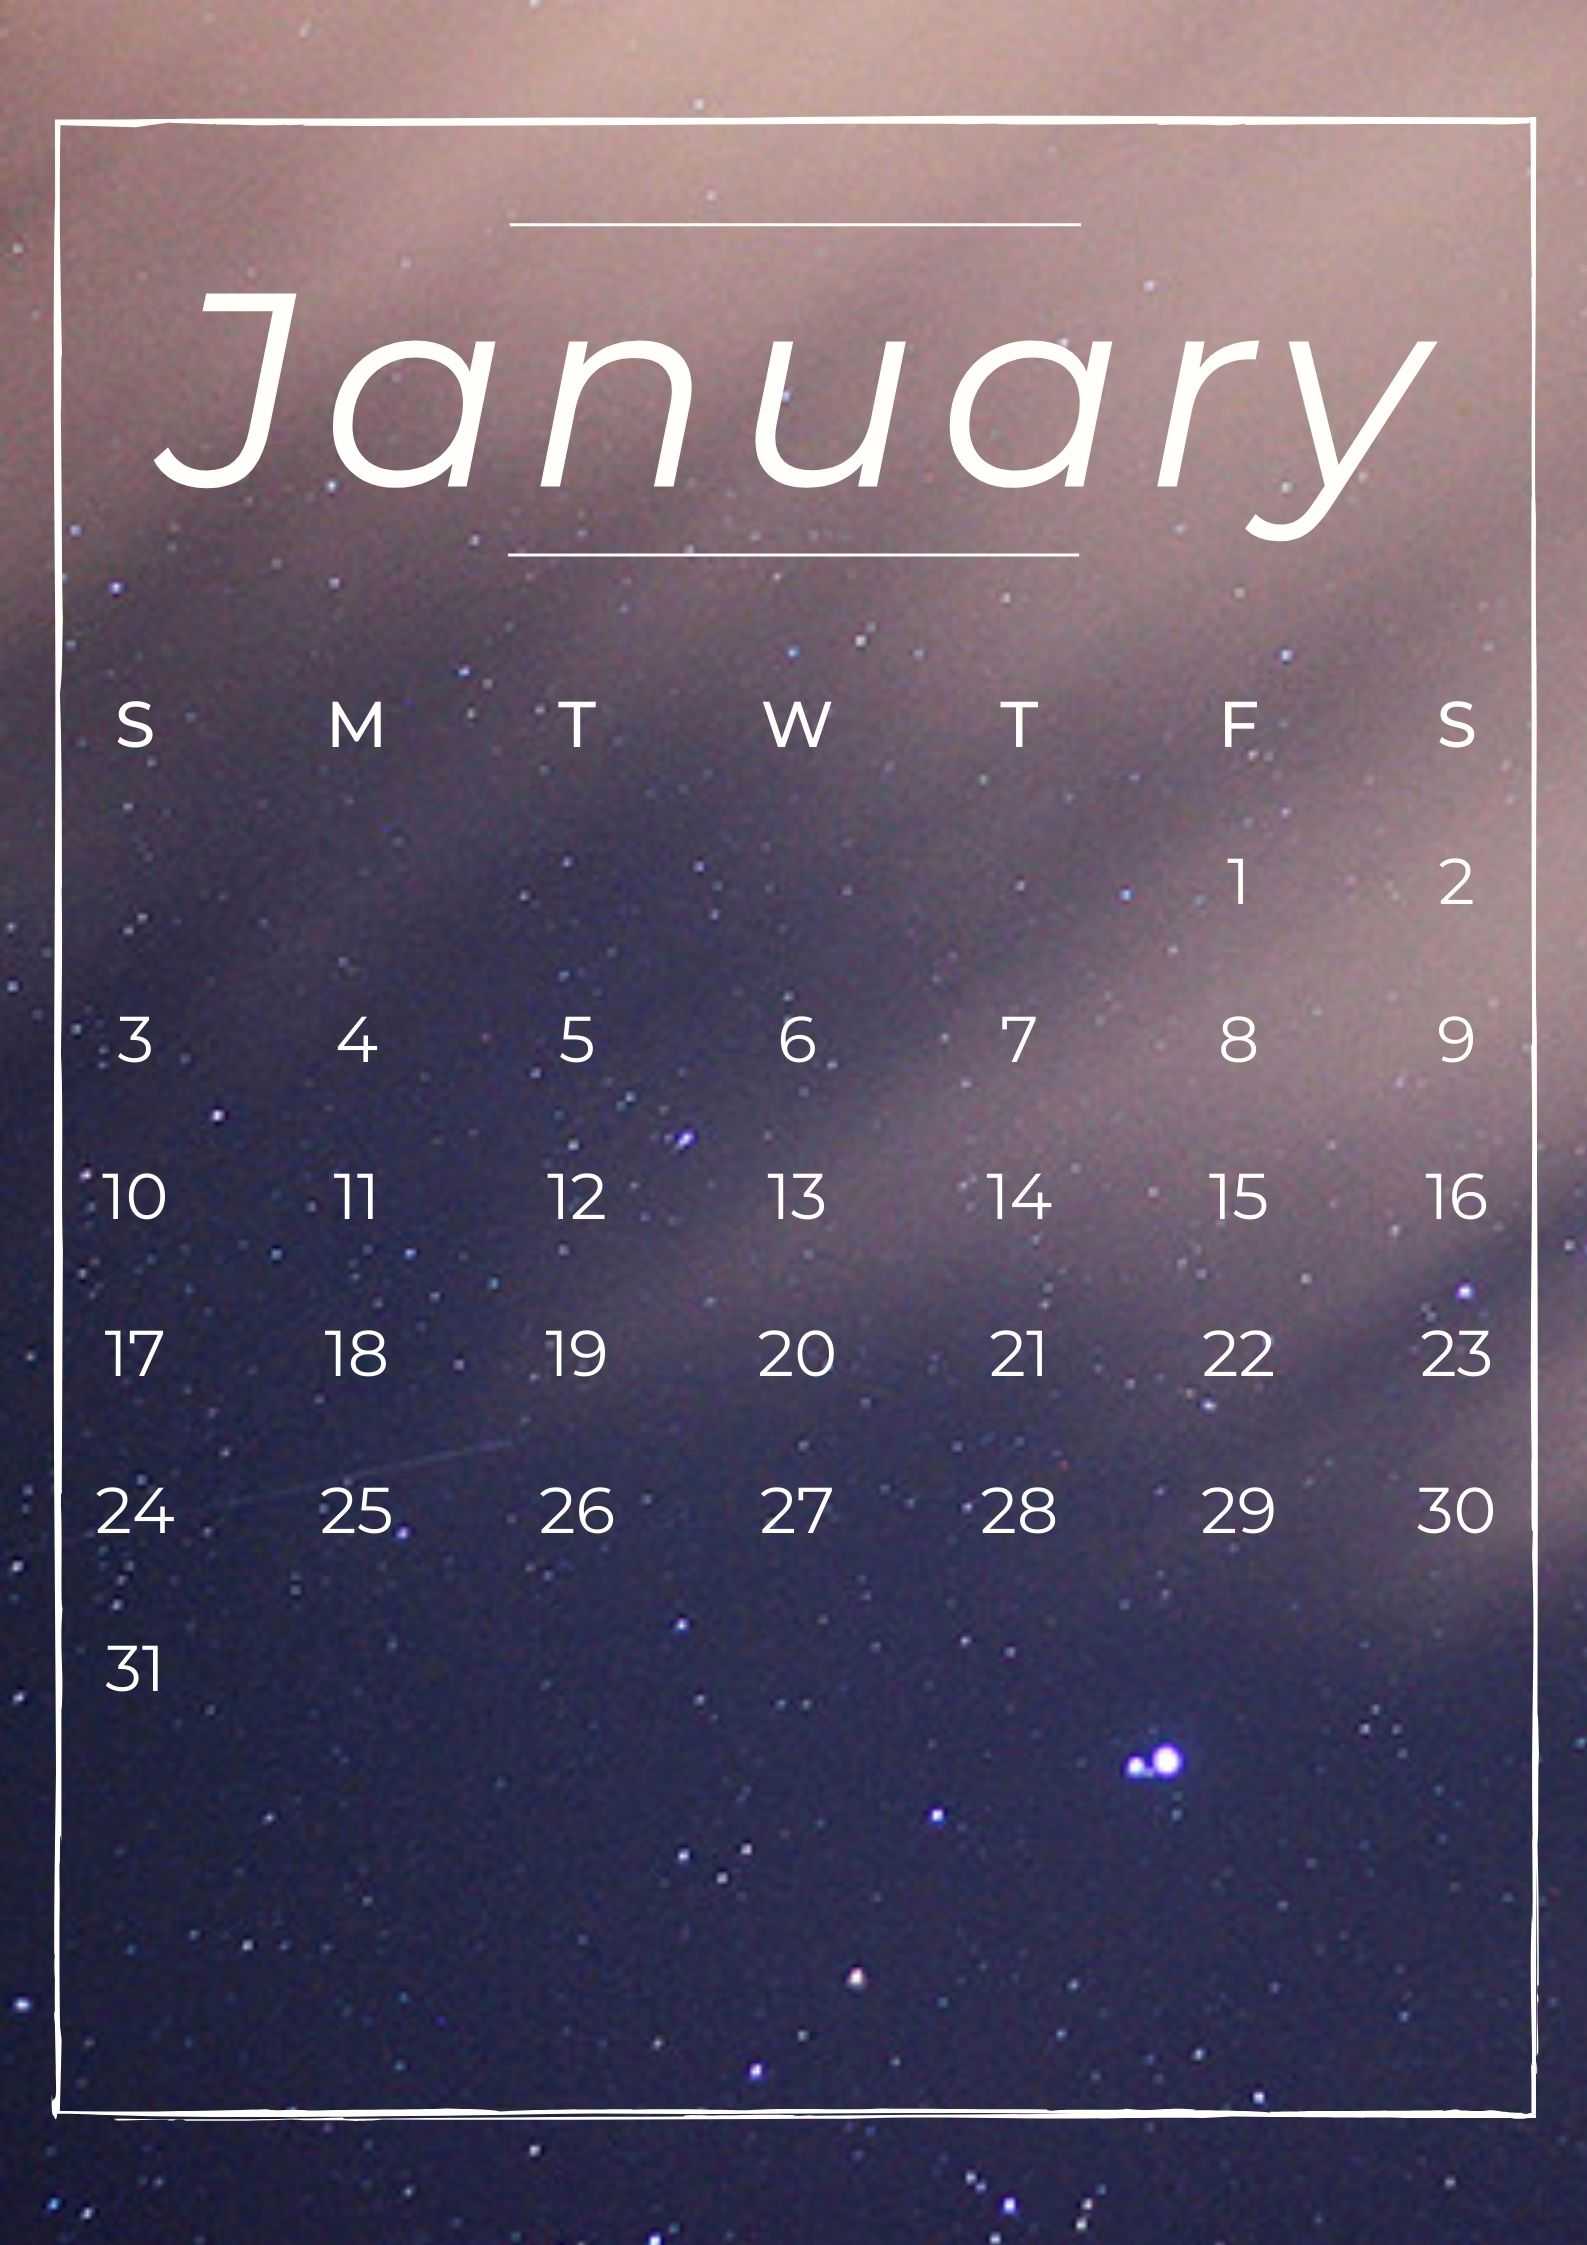 January 2021 Calendar Wallpaper 2